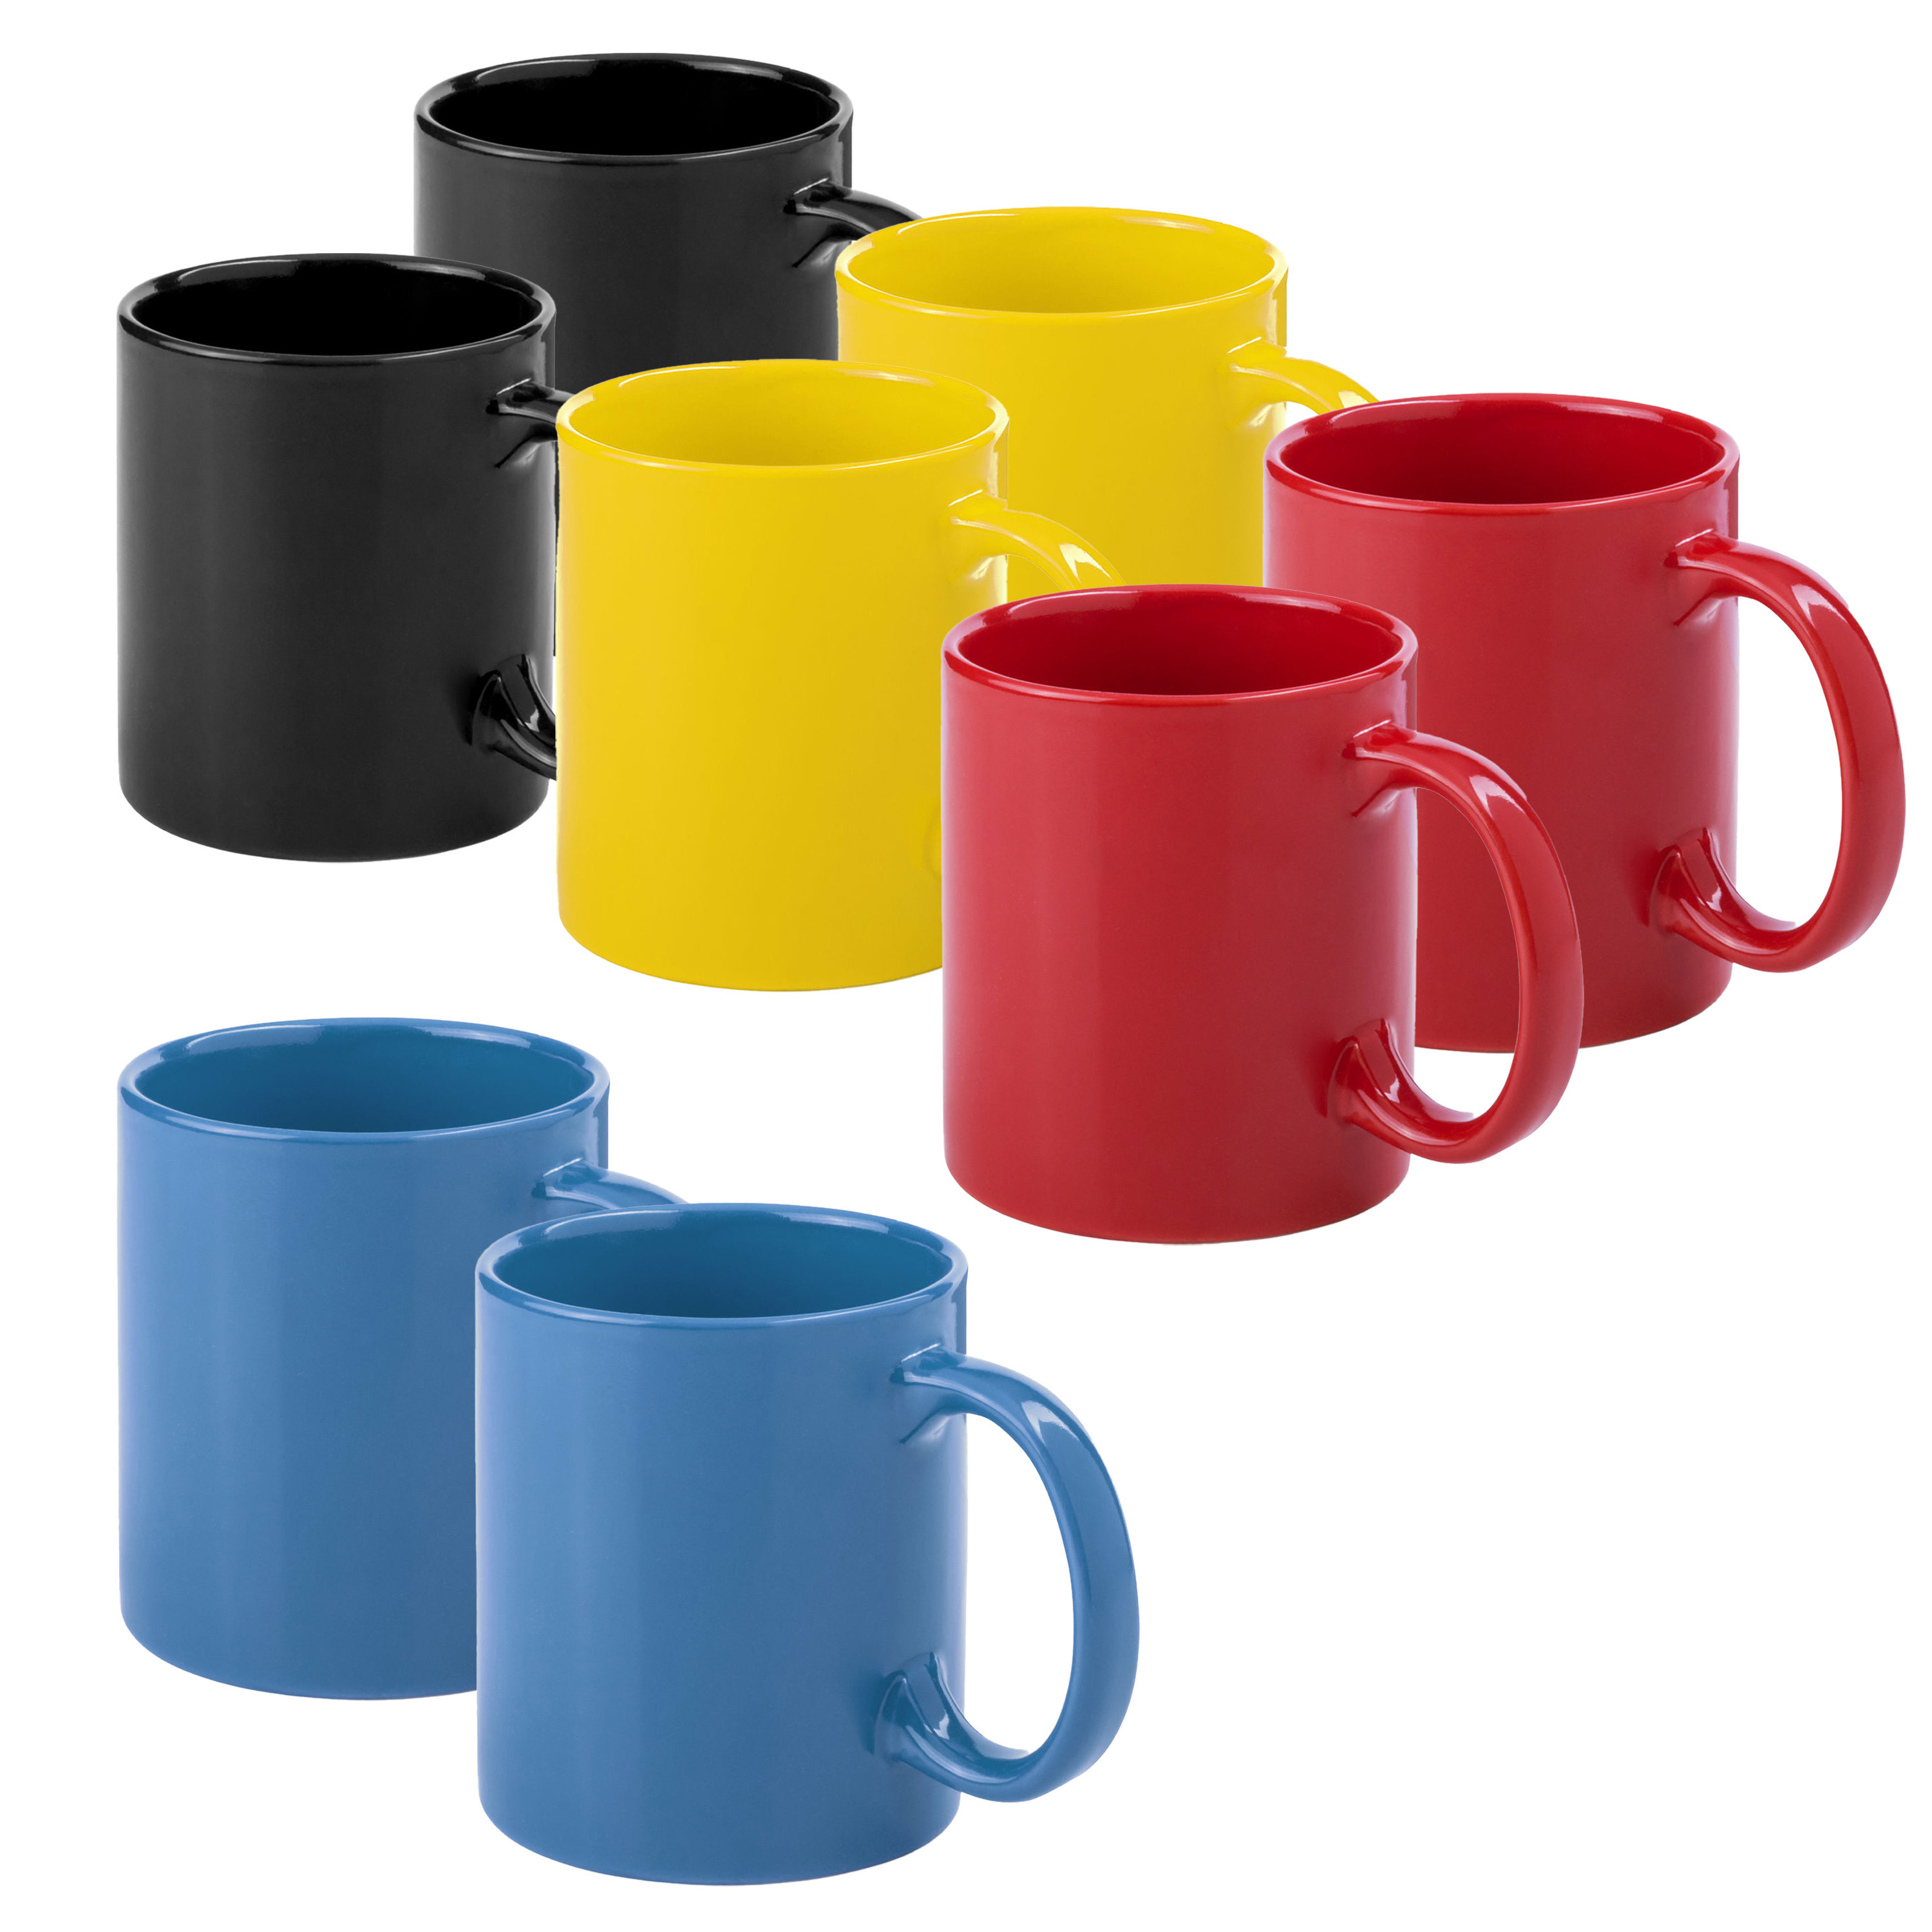 Koffie mokken/drinkbekers Auxerre - 8x - keramiek - geel/rood/blauw/zwart - 370 ml -